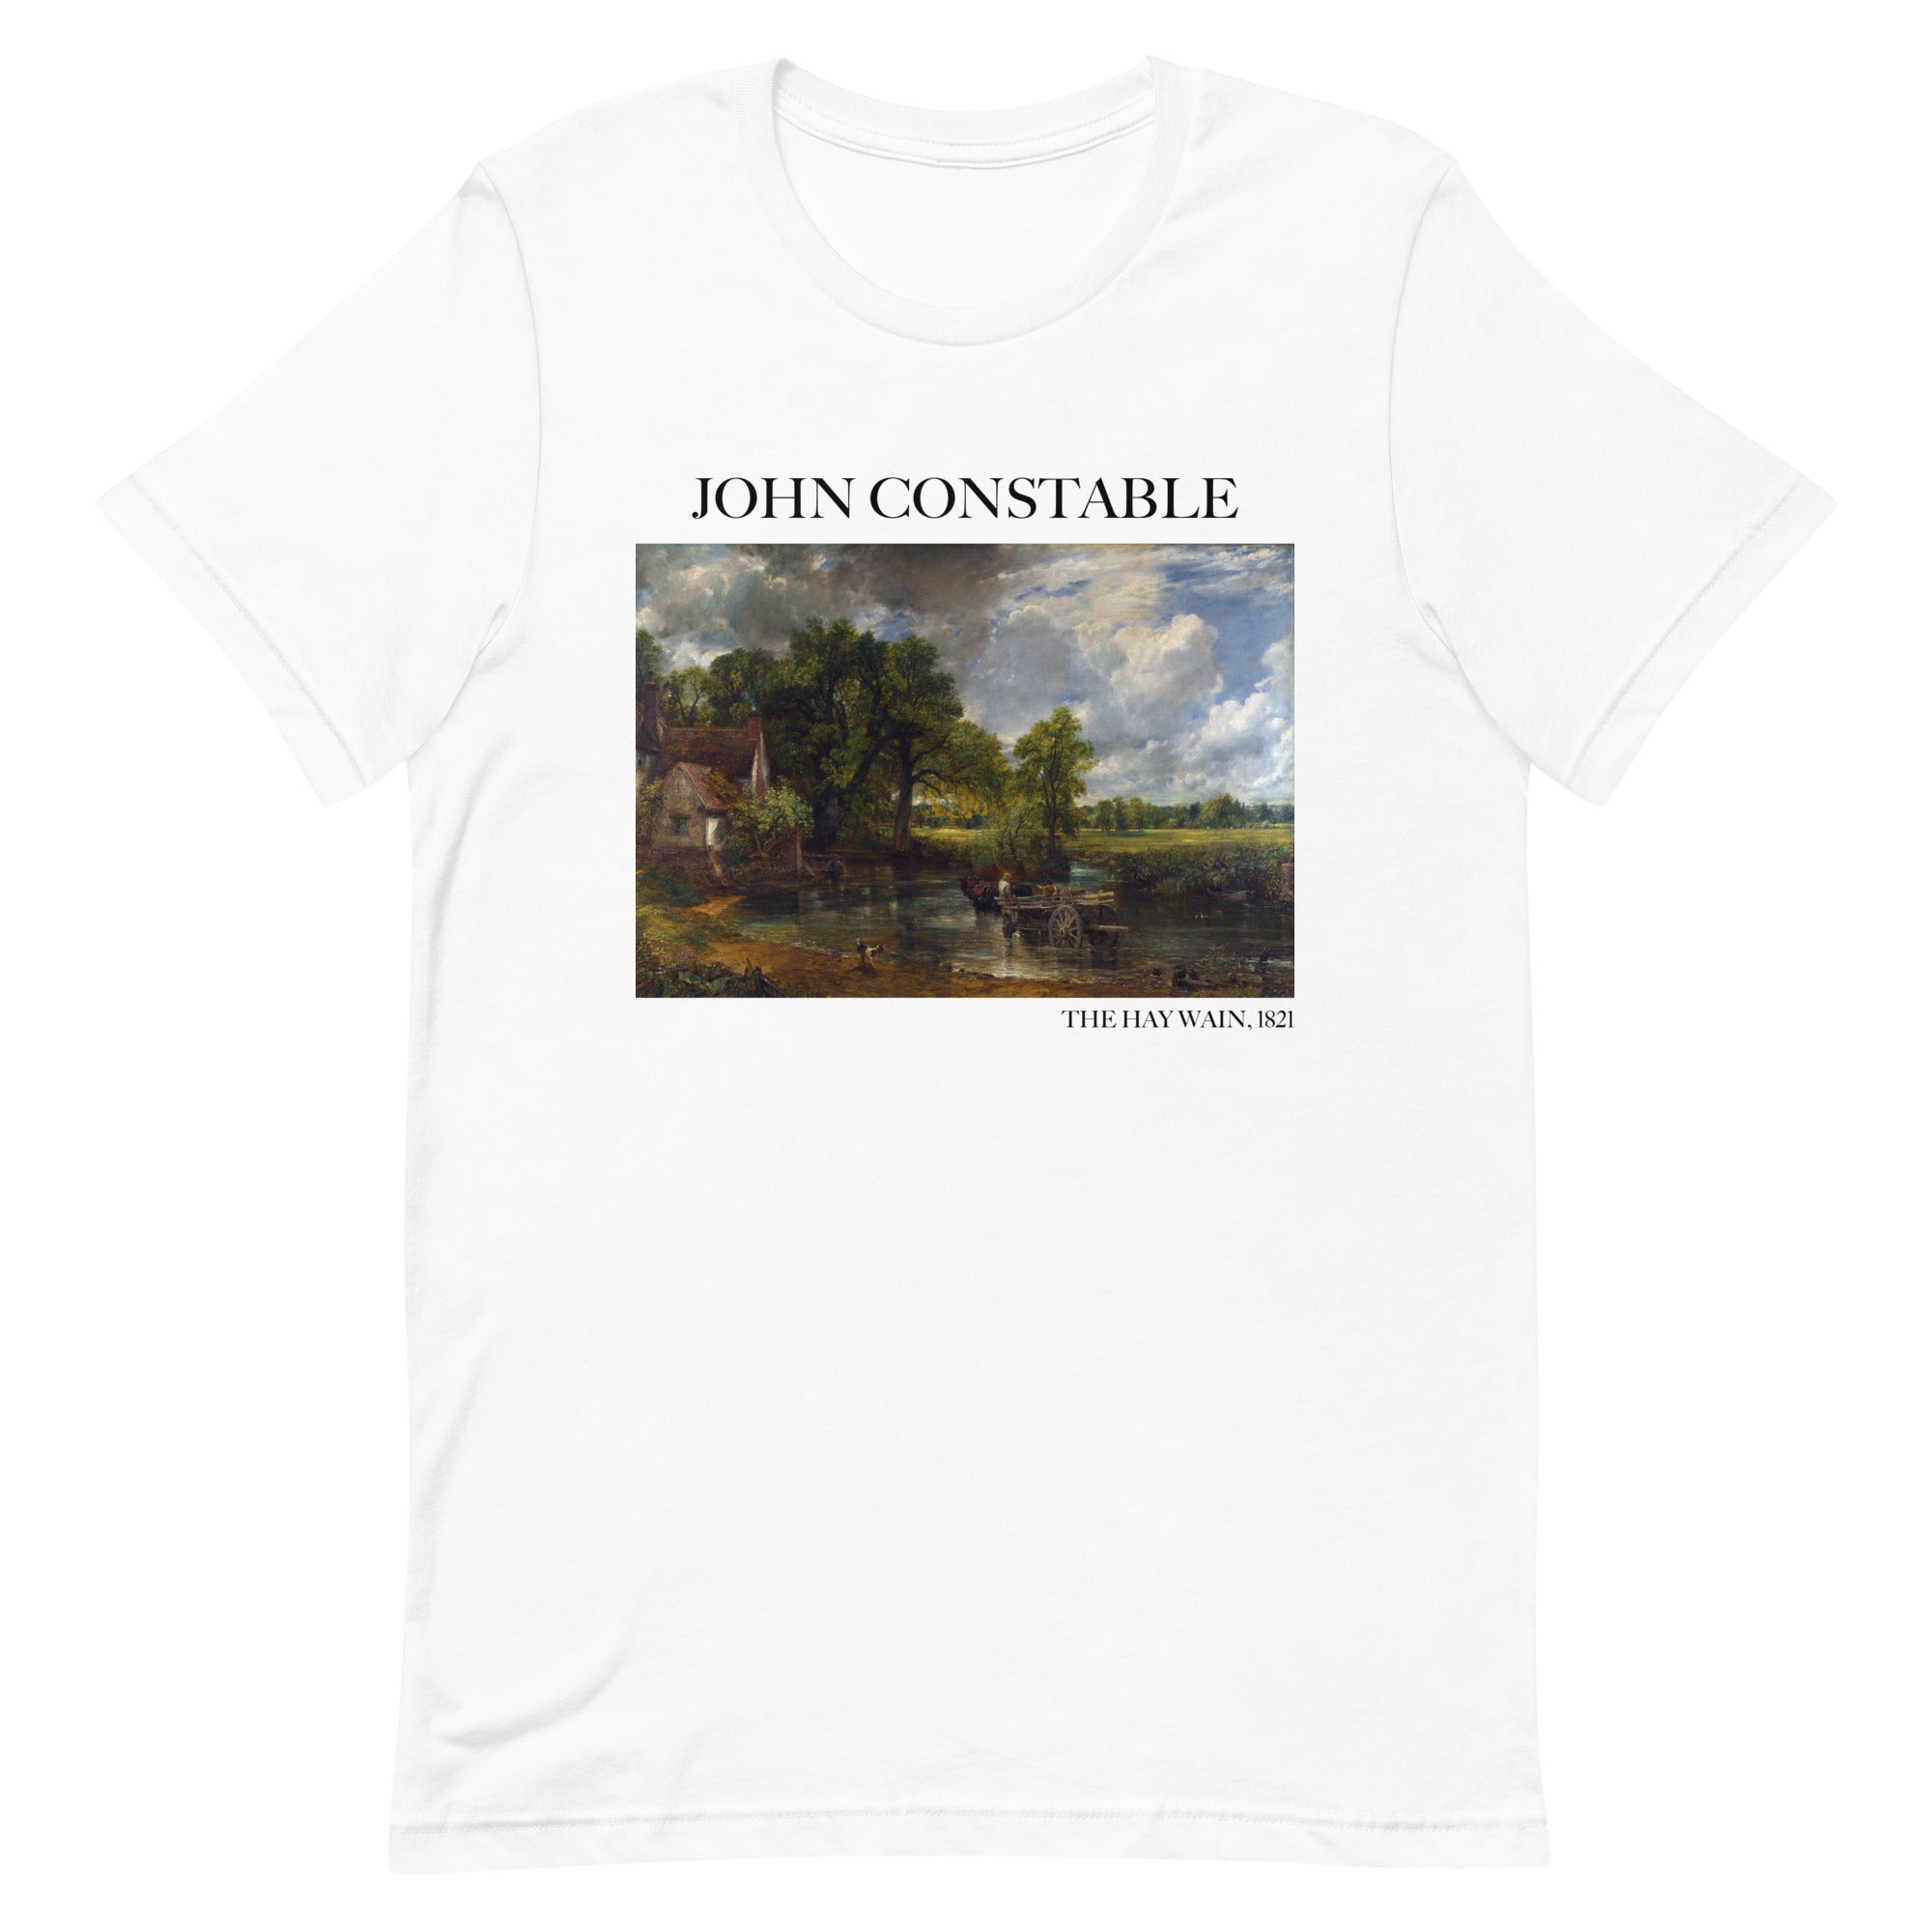 John Constable 'The Hay Wain' Famous Painting T-Shirt | Unisex Classic Art Tee